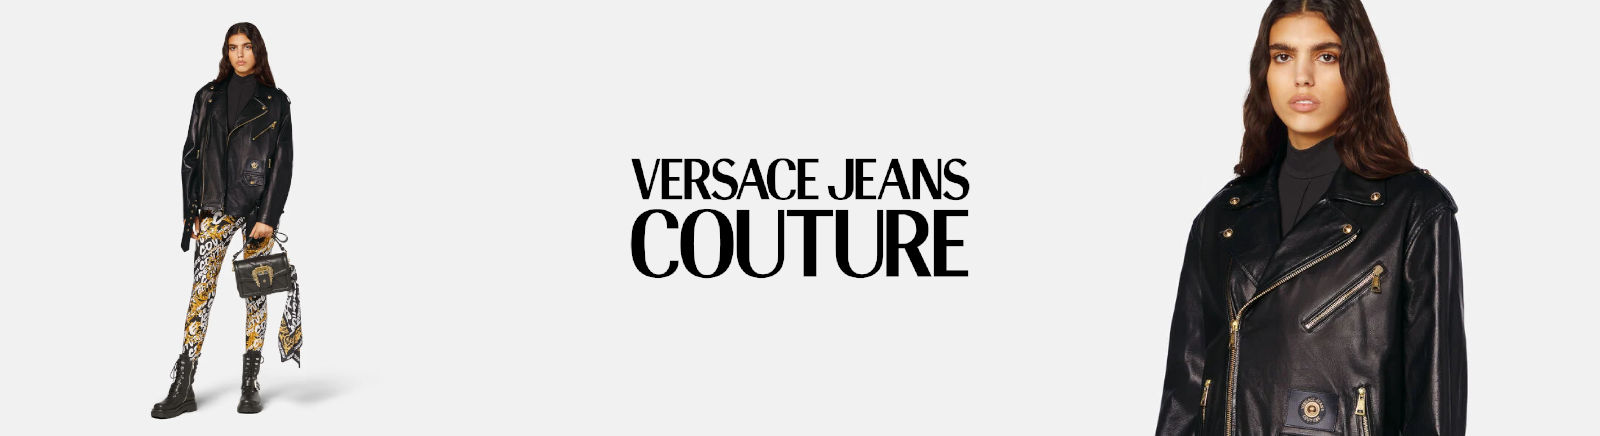 Versace Jeans Markenschuhe online kaufen im GISY Schuhe Shop